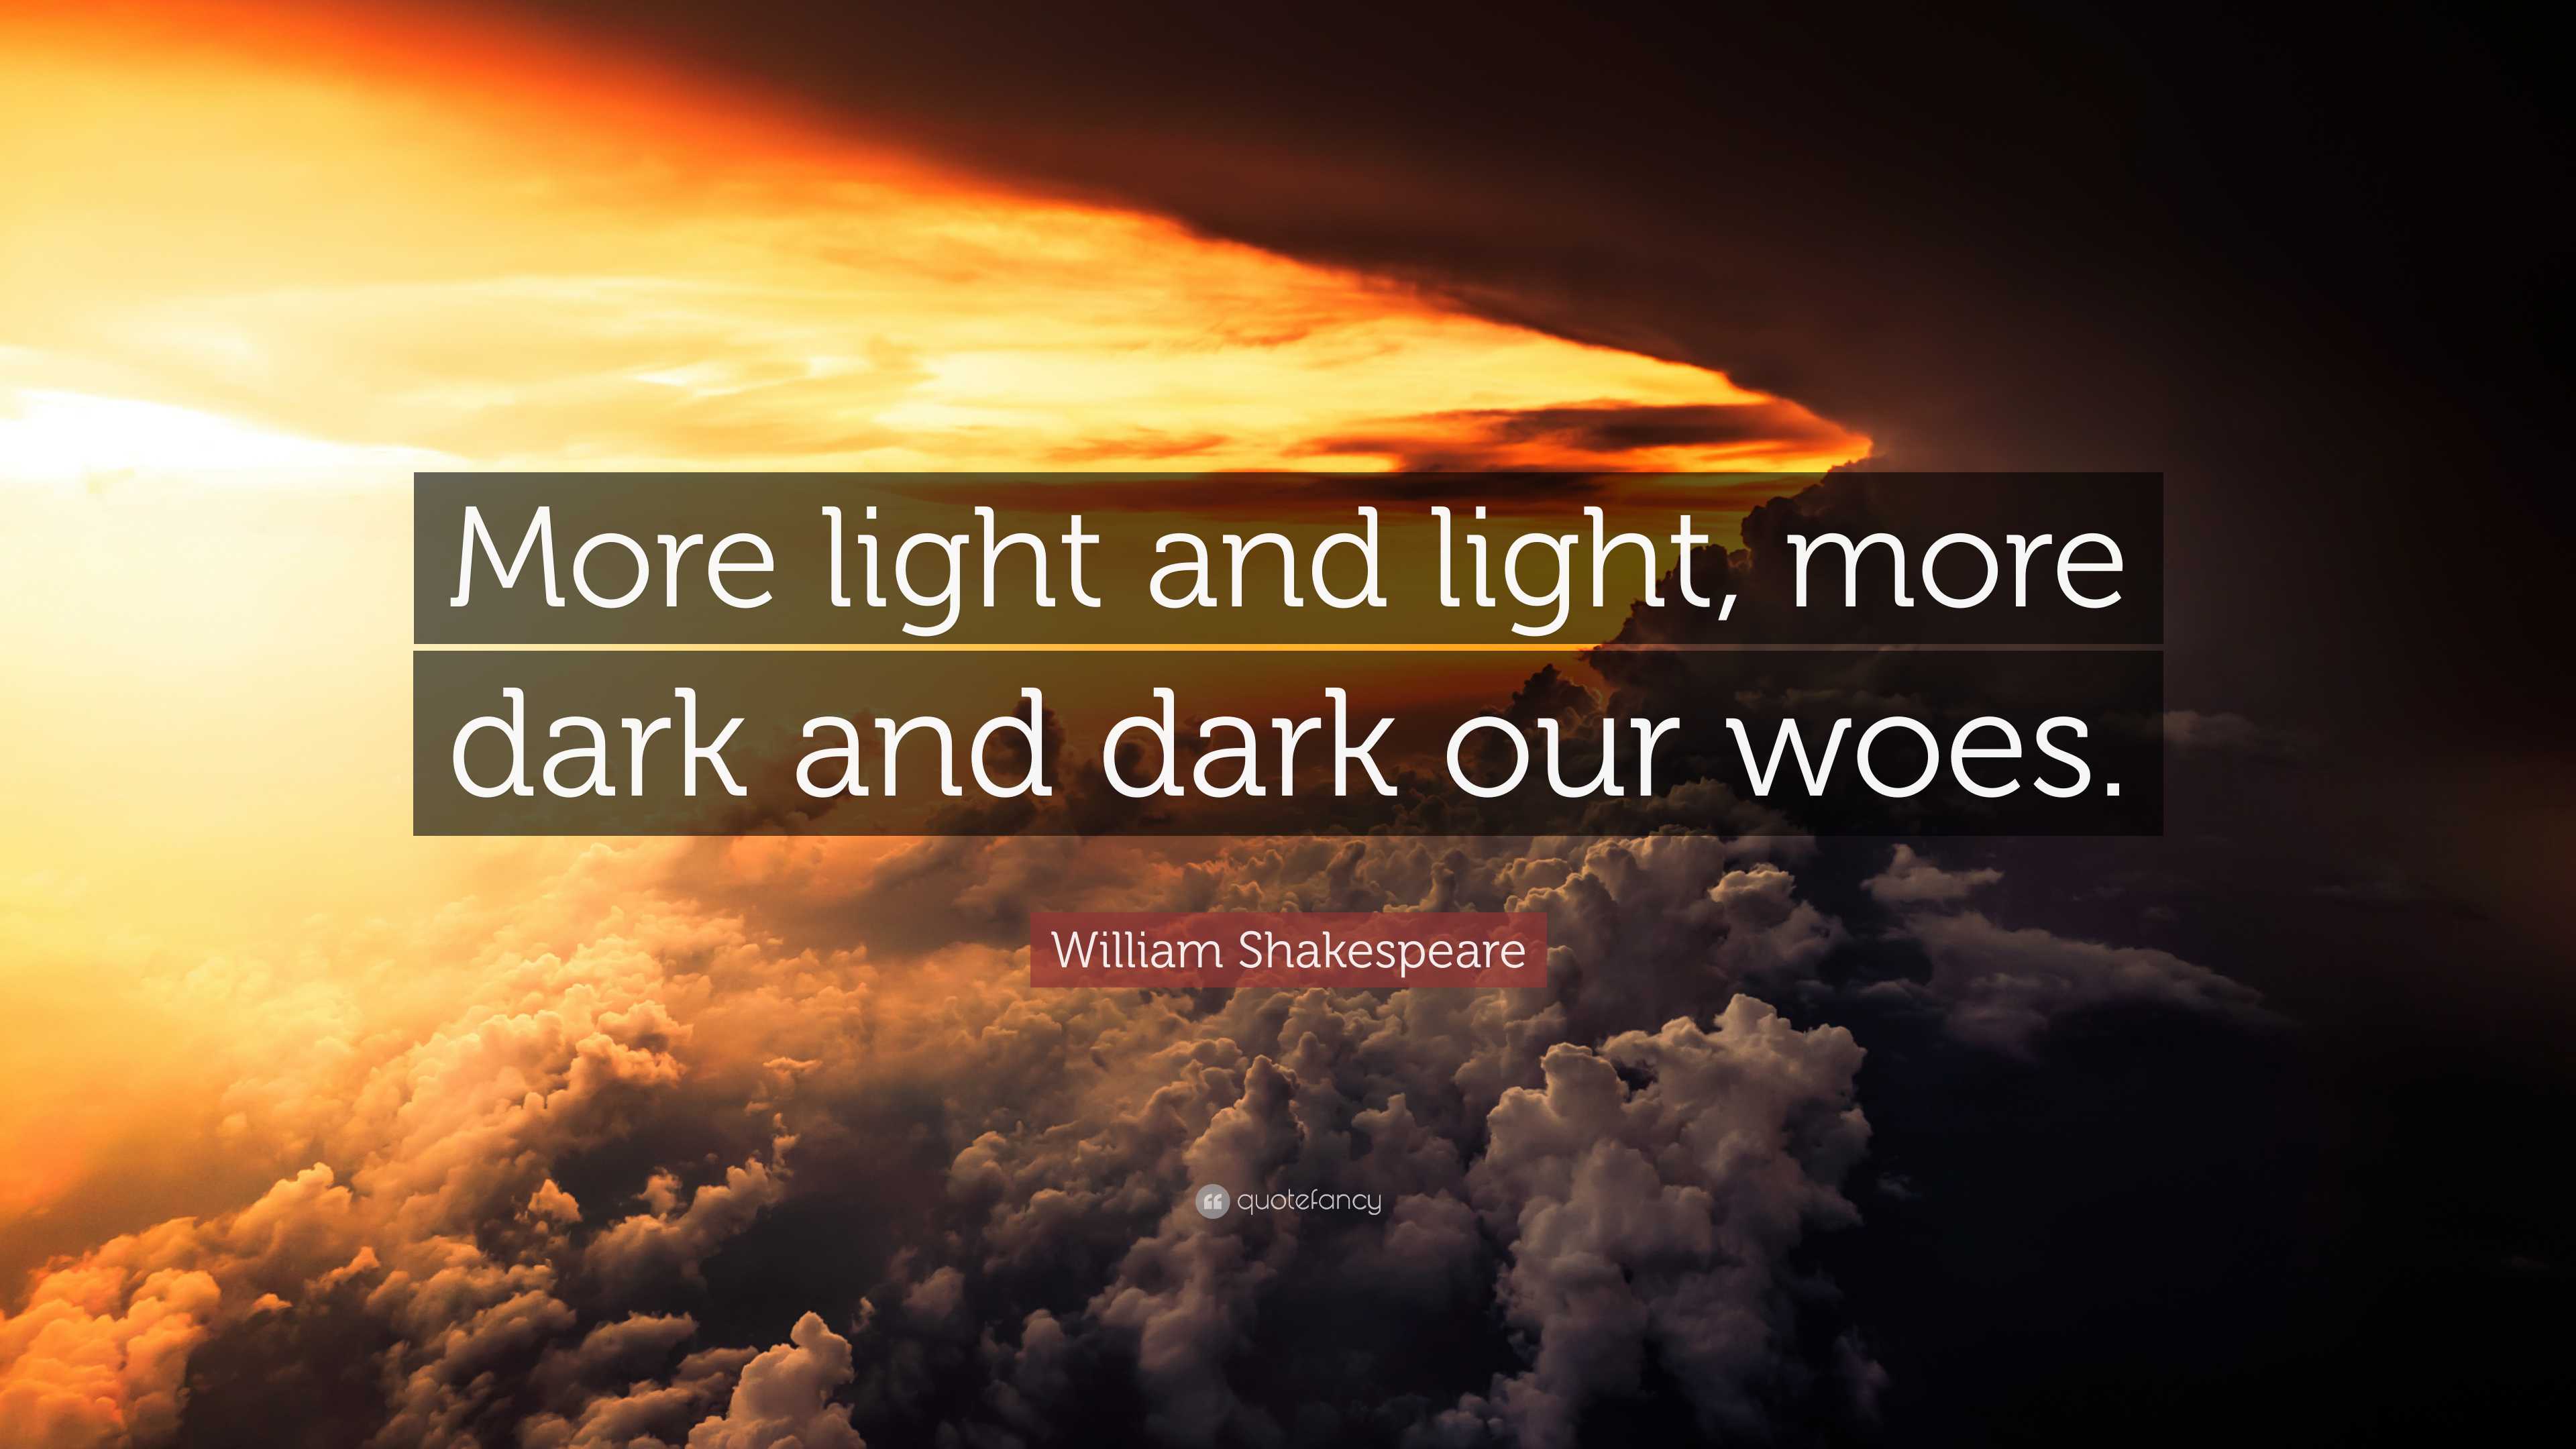 William Shakespeare Quote: “More light and light, more dark and dark ...